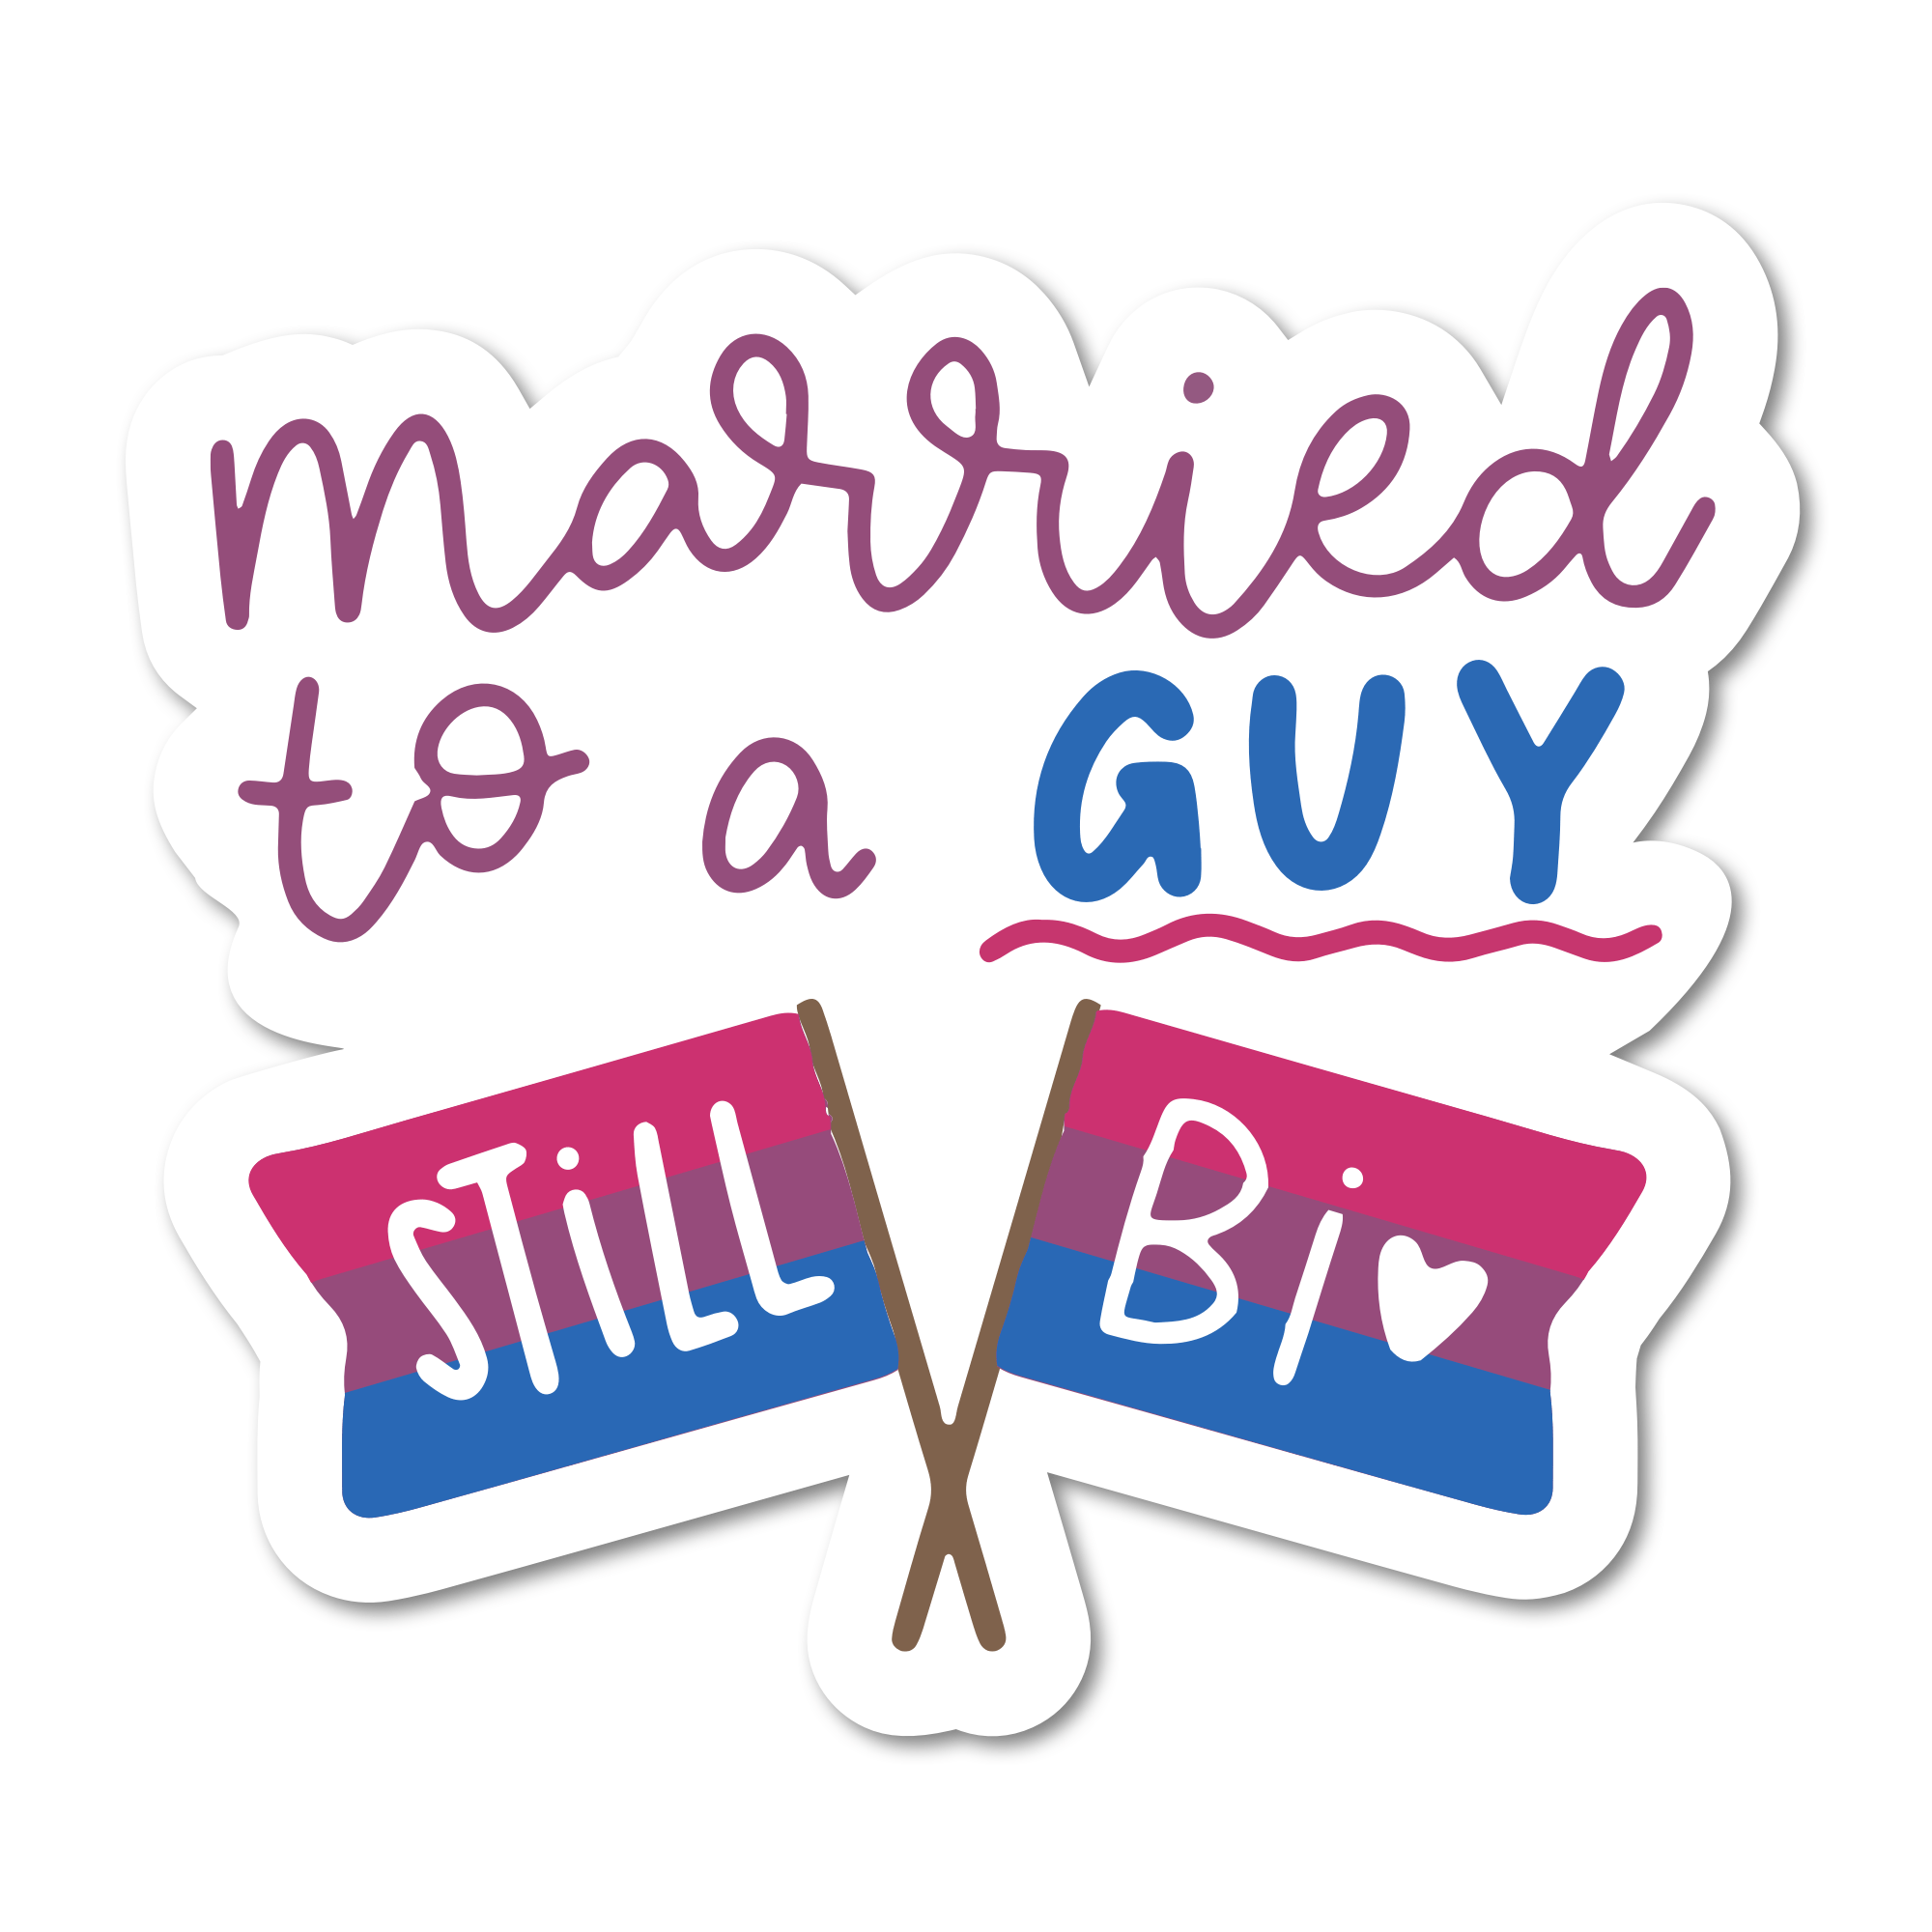 Married To A Guy, Still Bi - Bisexual Pride Sticker - Spiral Circle